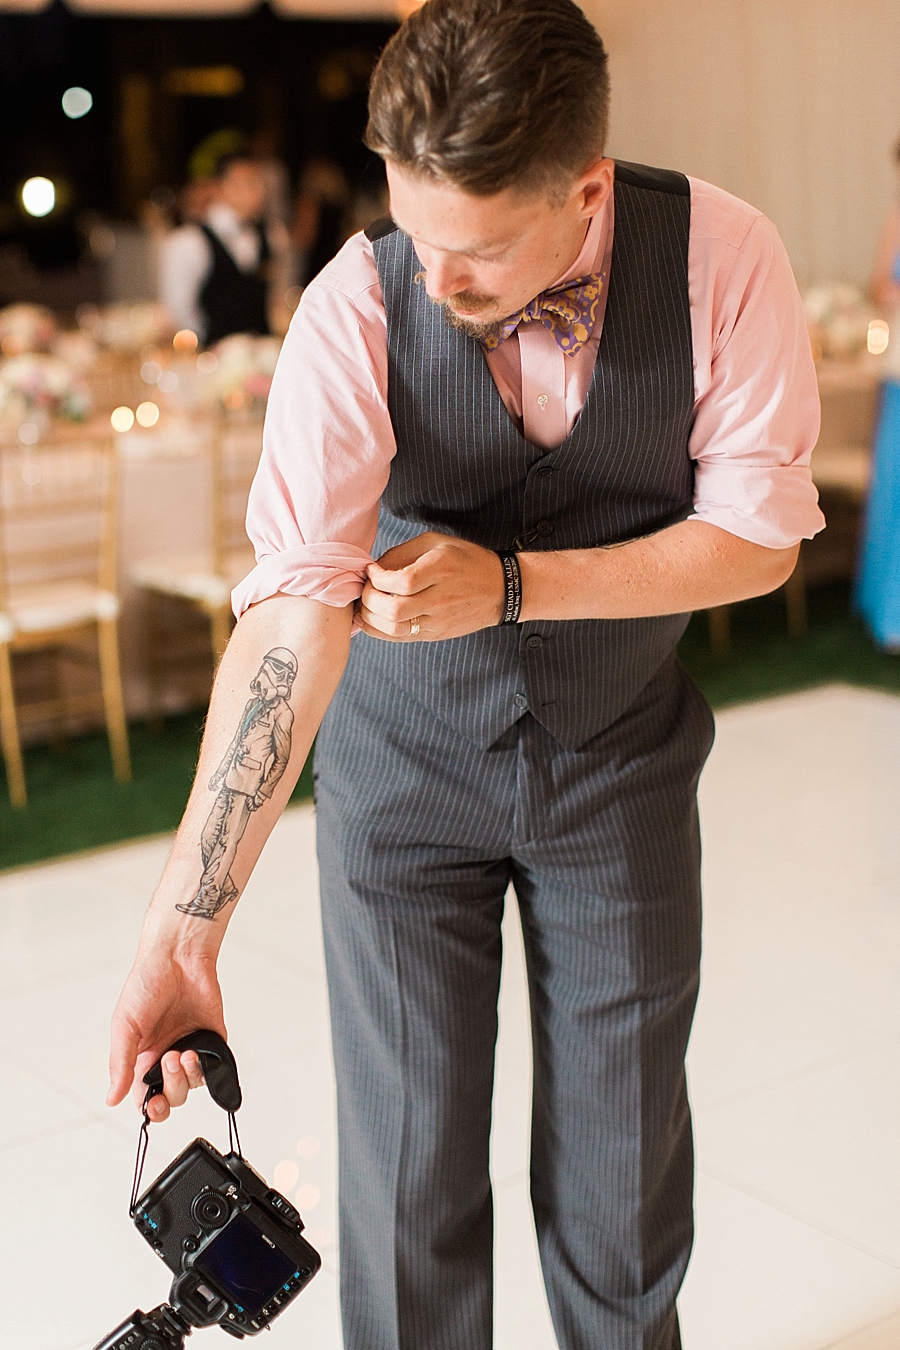 Male photographer wedding attire | Abby Grace Photography